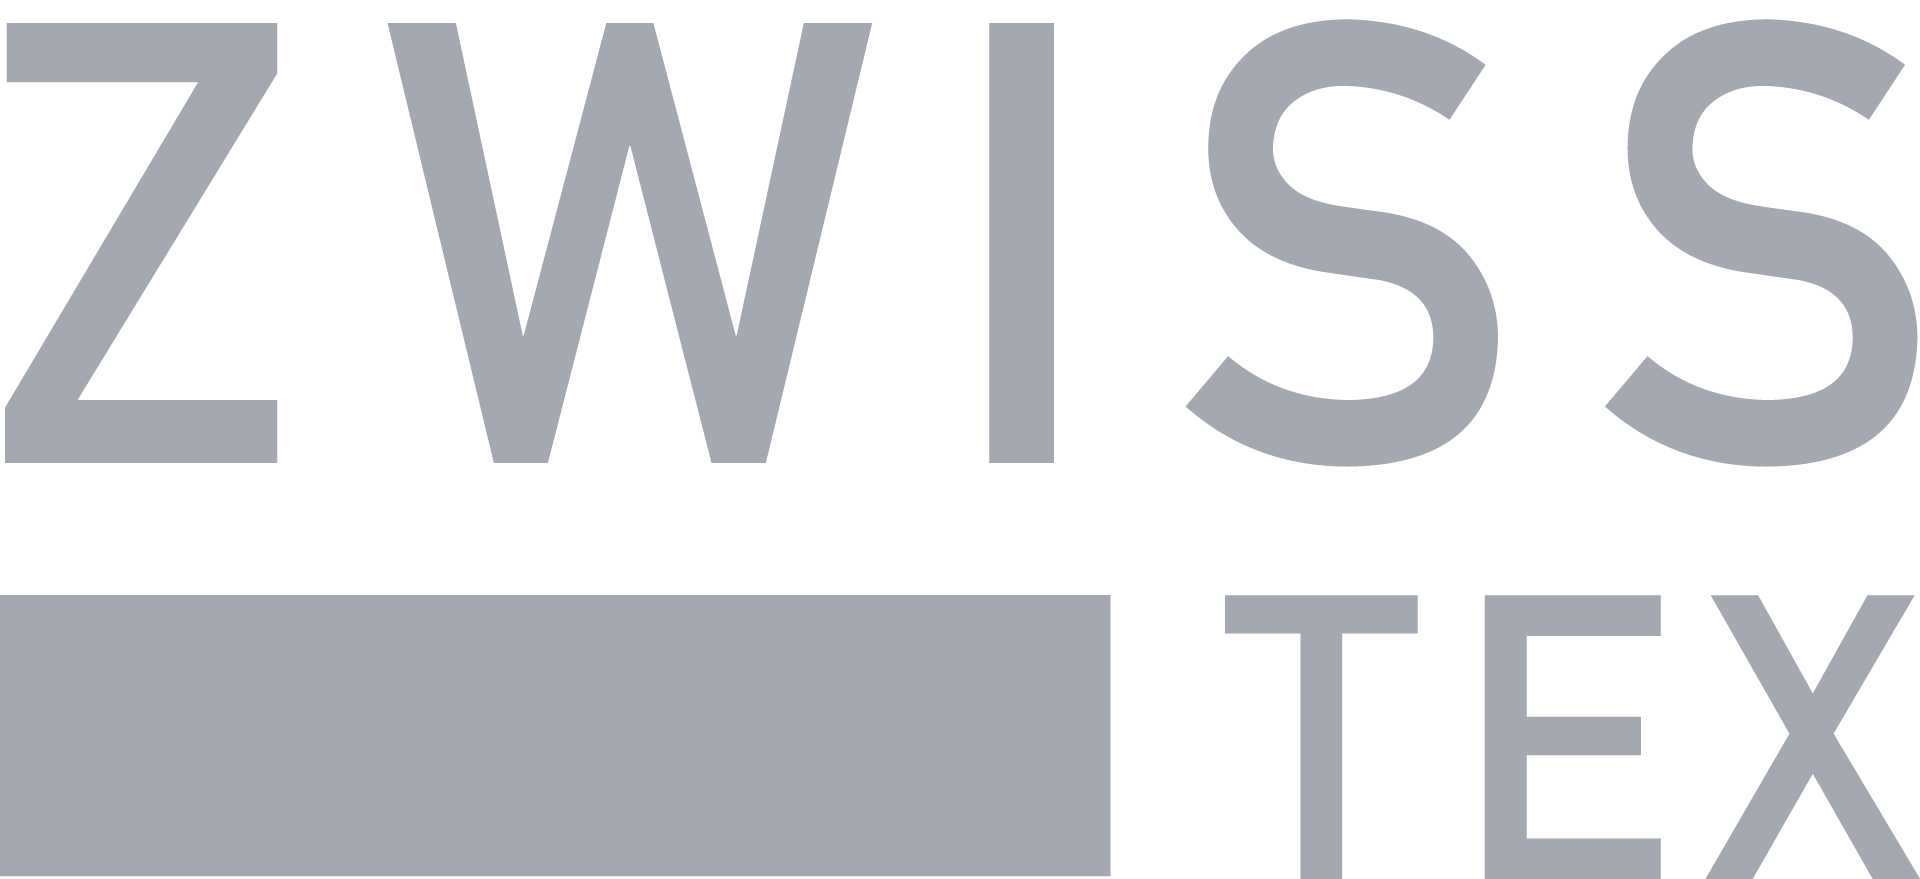 Illustration of the zwissTEX logo